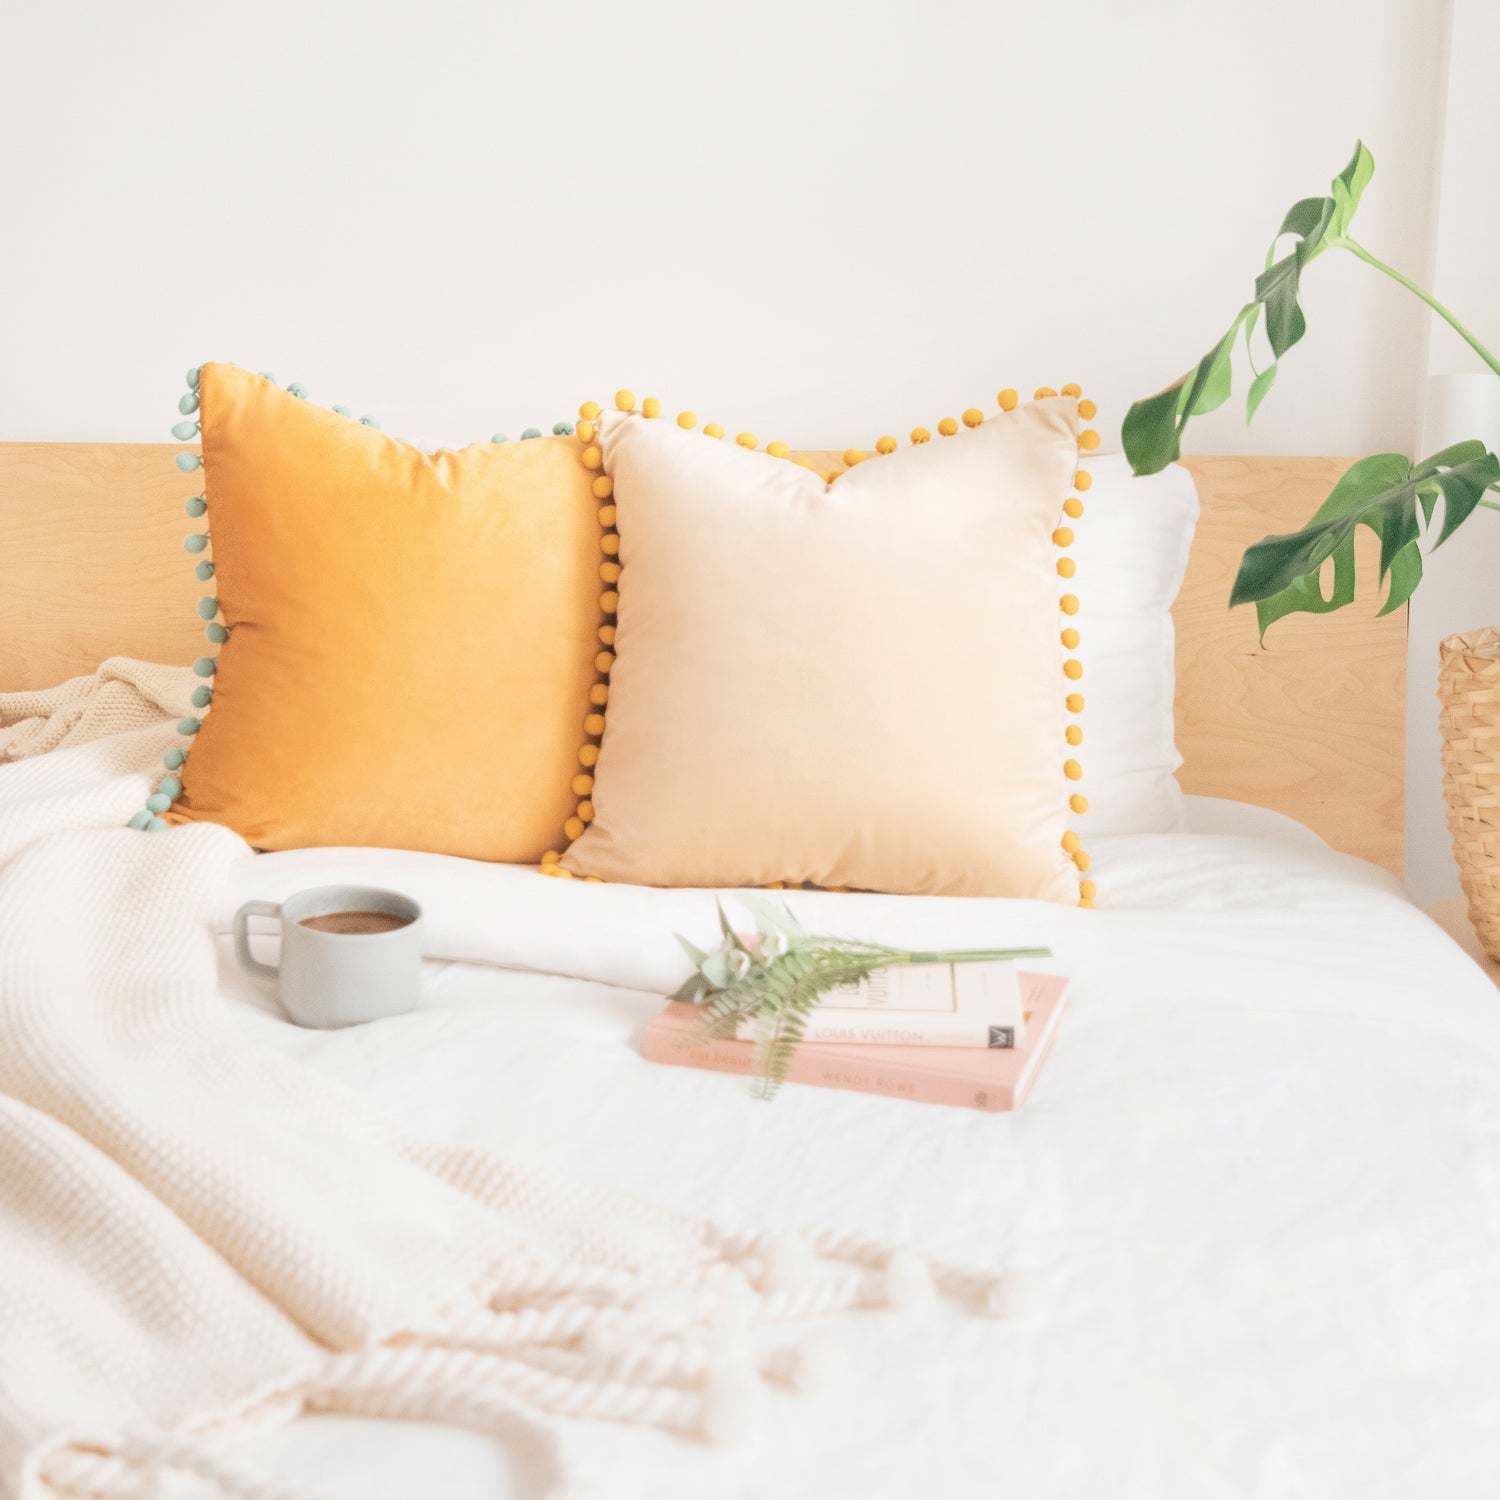 pom pom yellow orange teal beige decorative throw pillow covers velvet soft